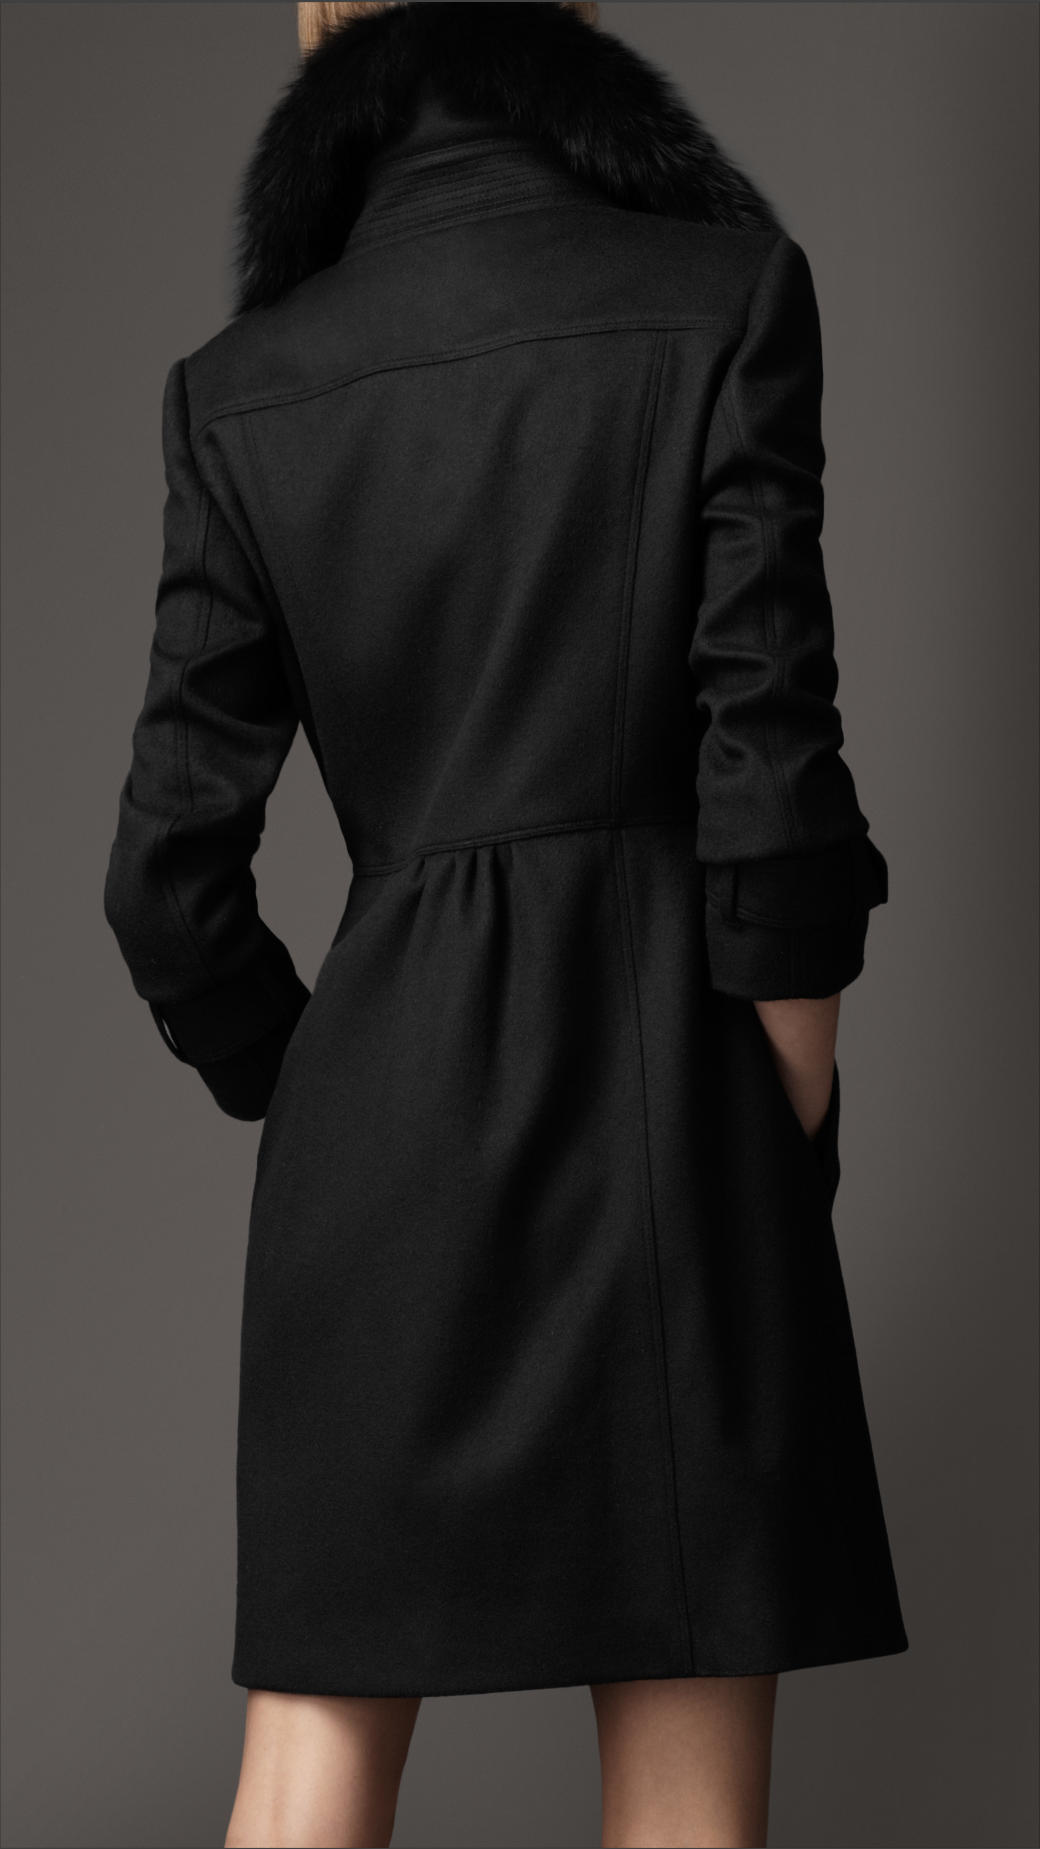 Lyst - Burberry Fur Collar Trench Coat in Black